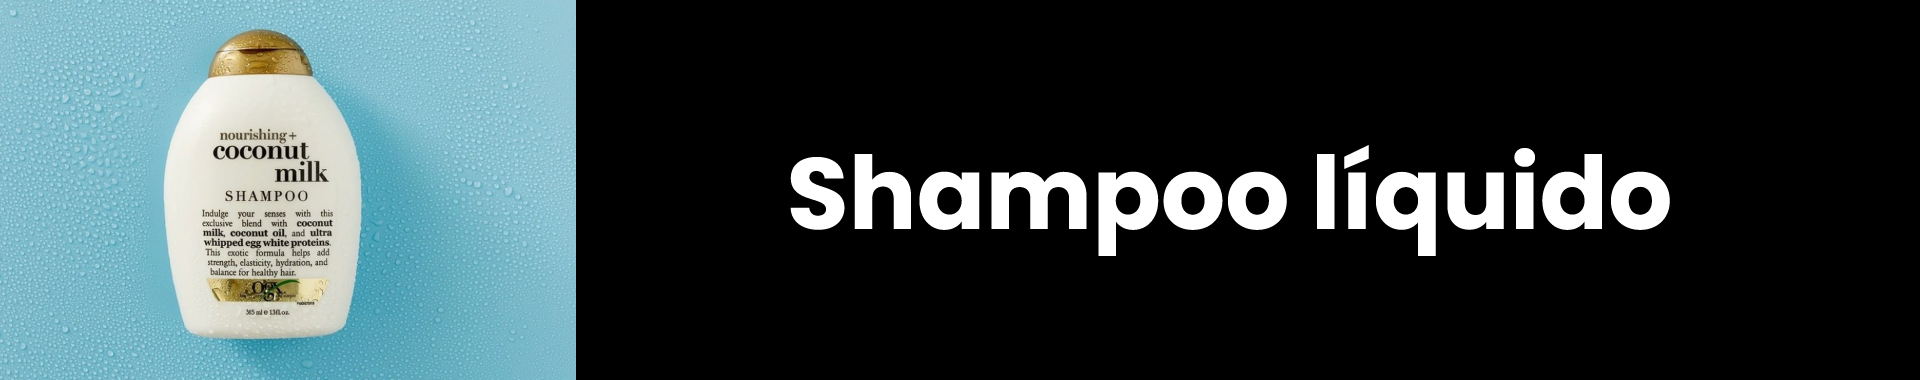 Banner shampoo